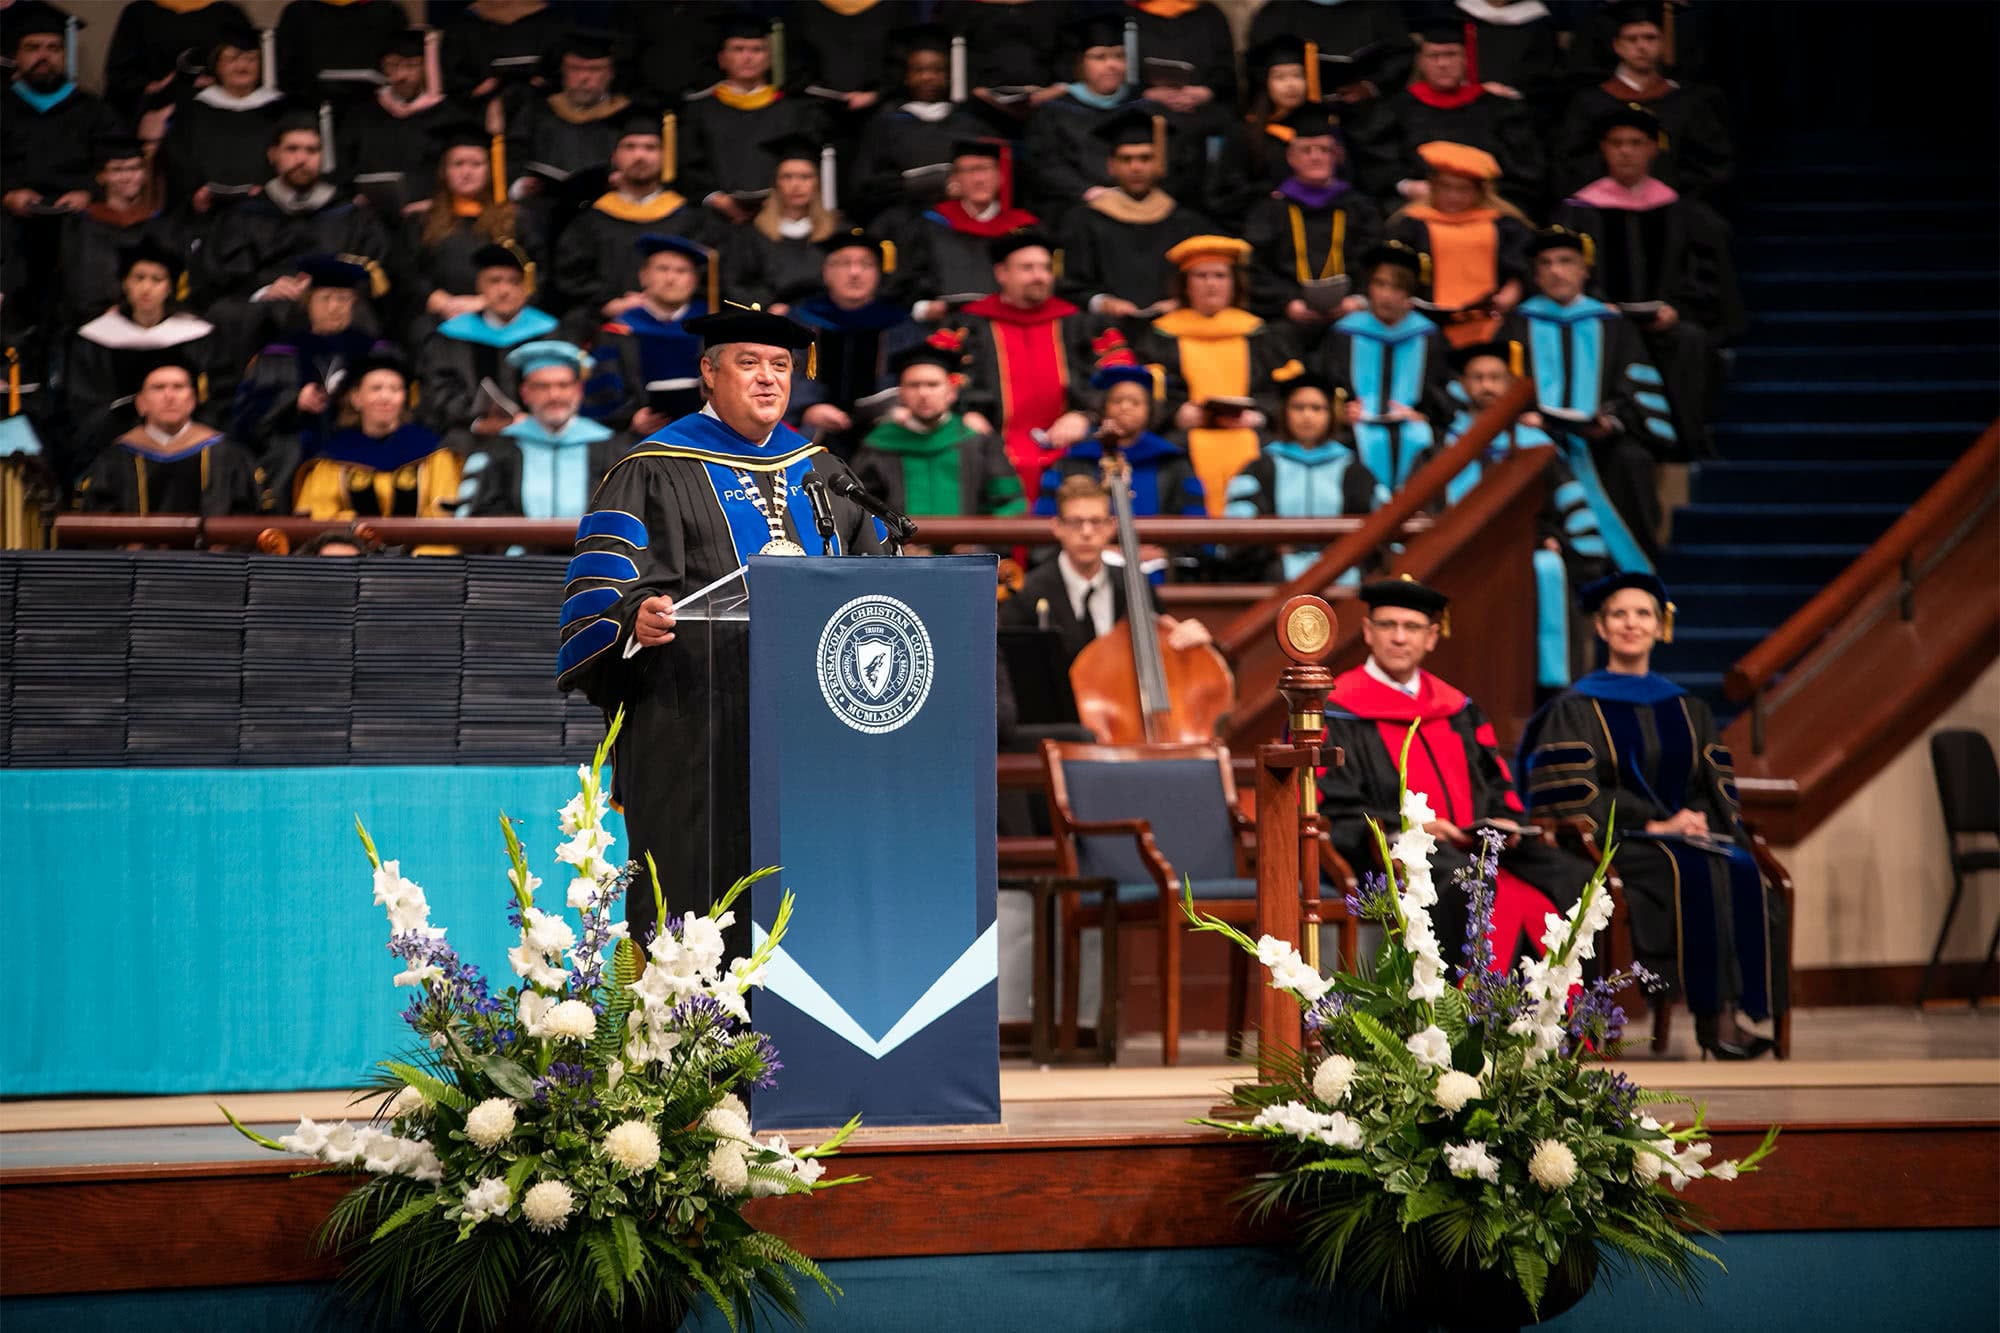 Dr. Shoemaker addresses the graduates